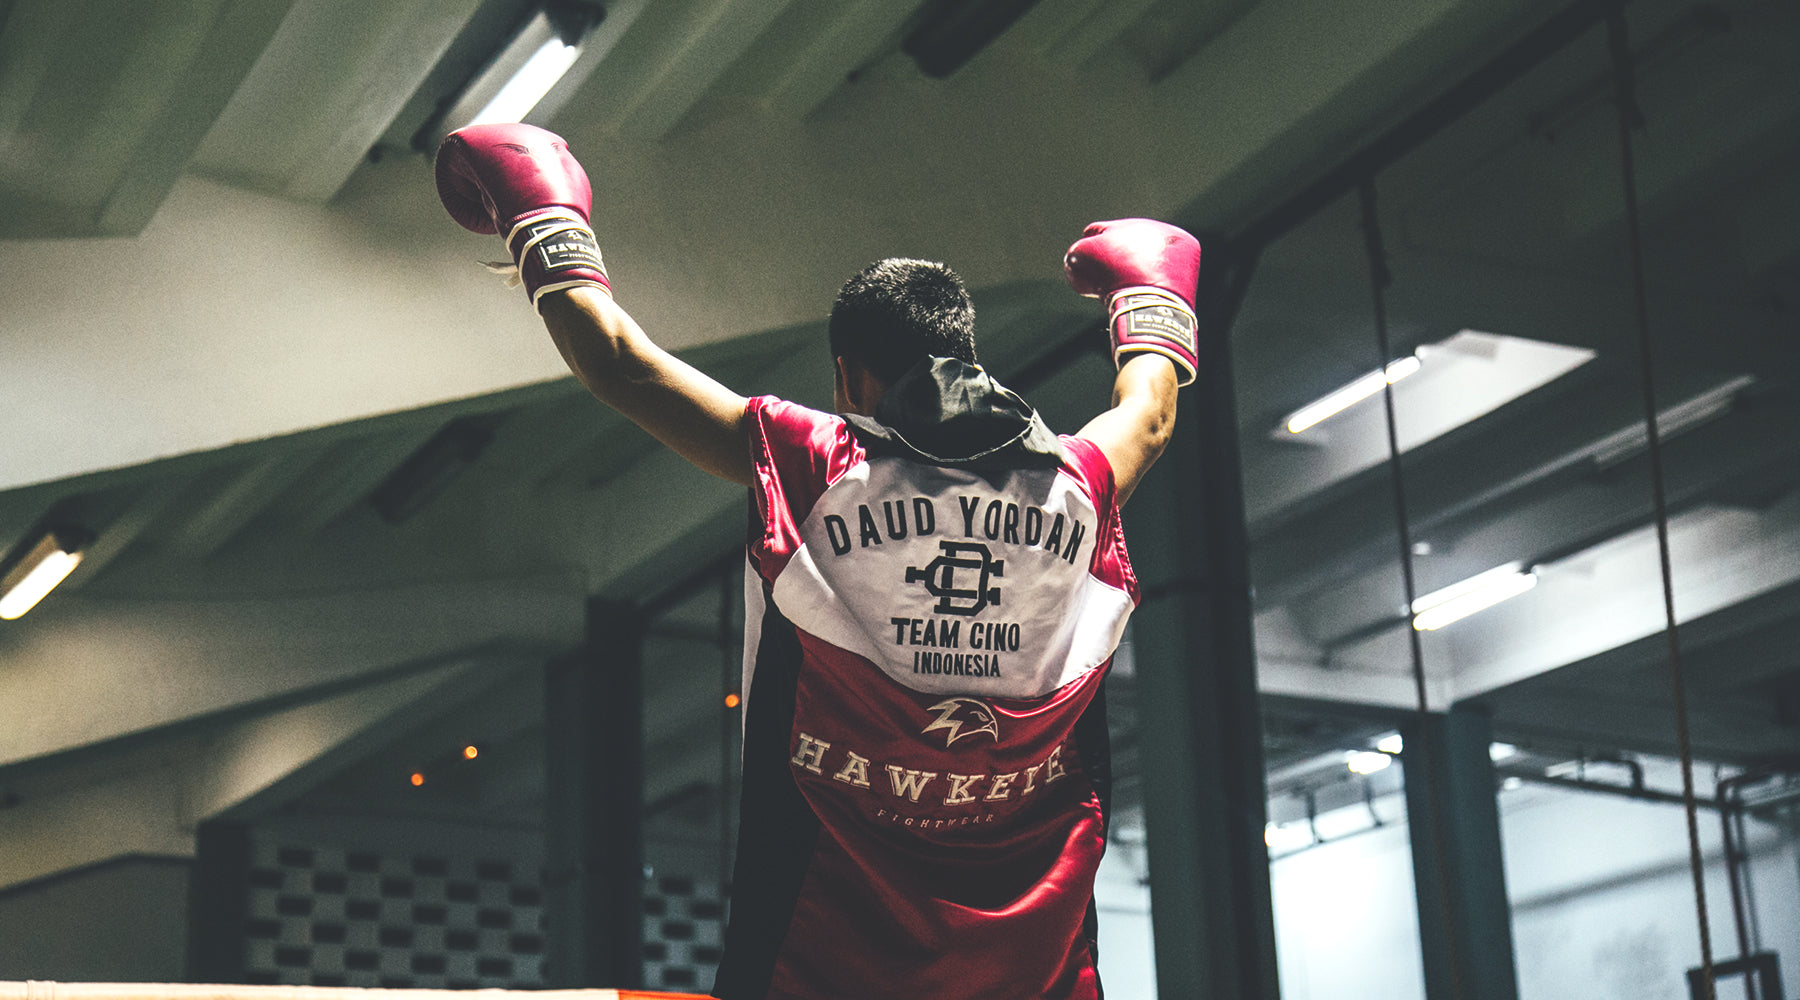 Behind Story of Daud Yordan Became a Boxer